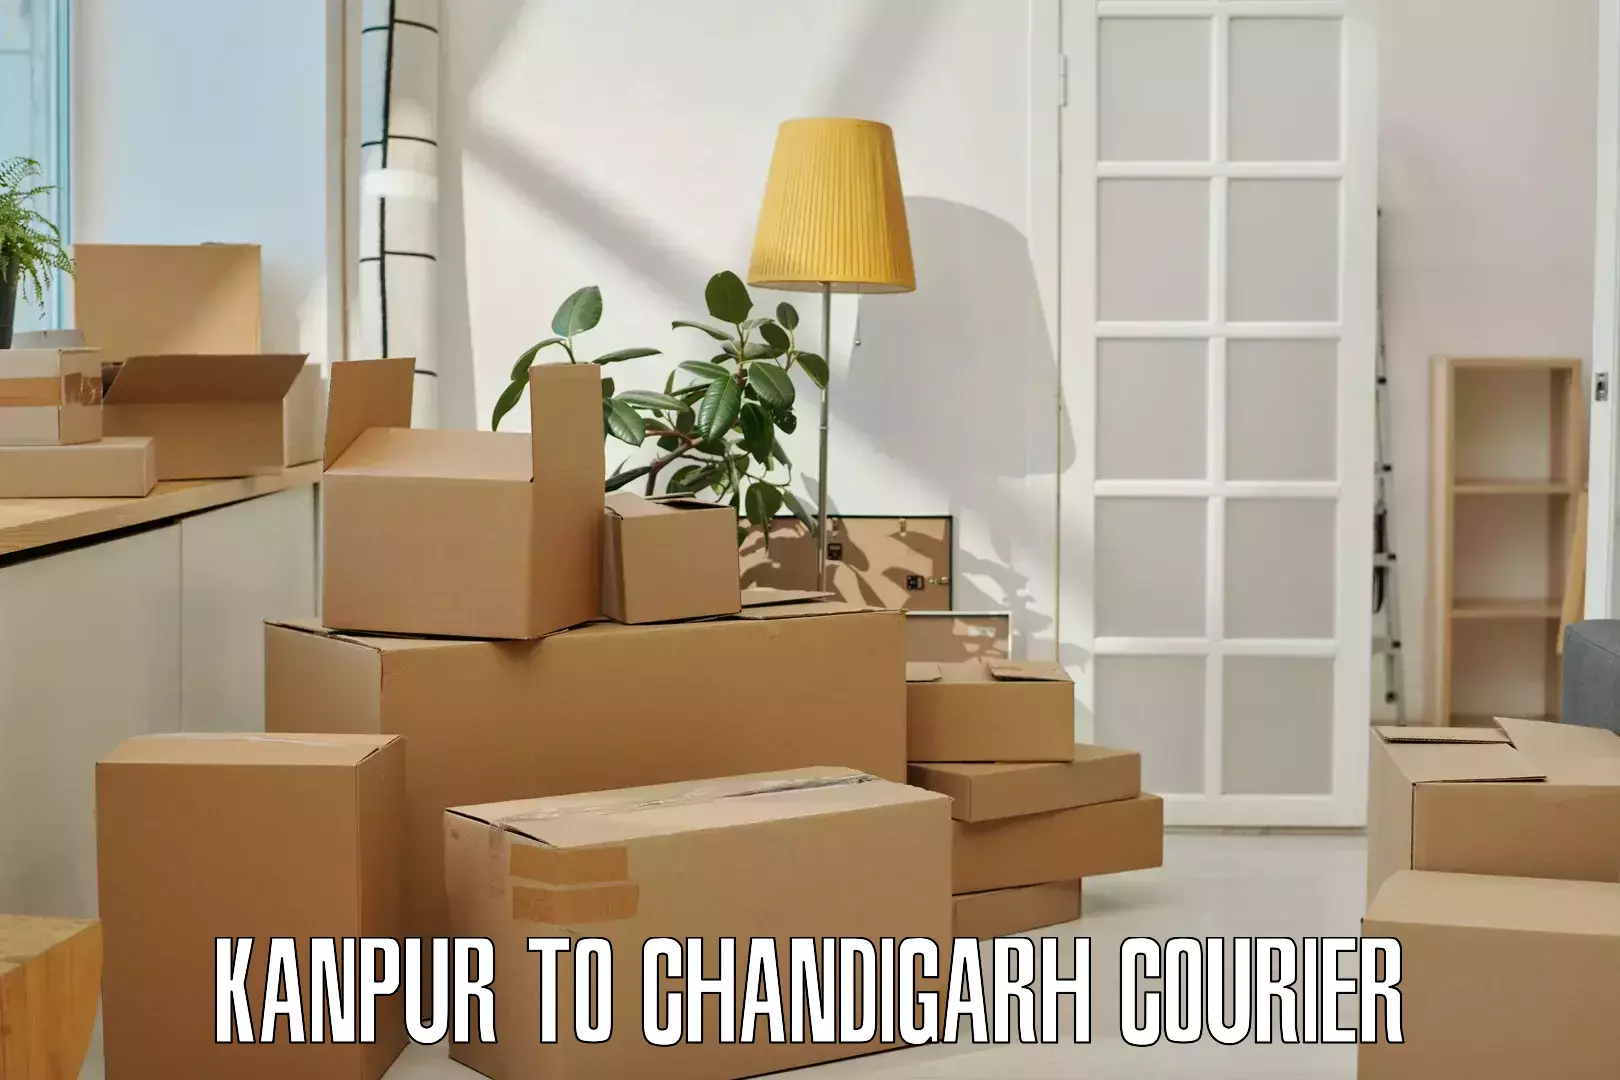 Quick dispatch service Kanpur to Chandigarh